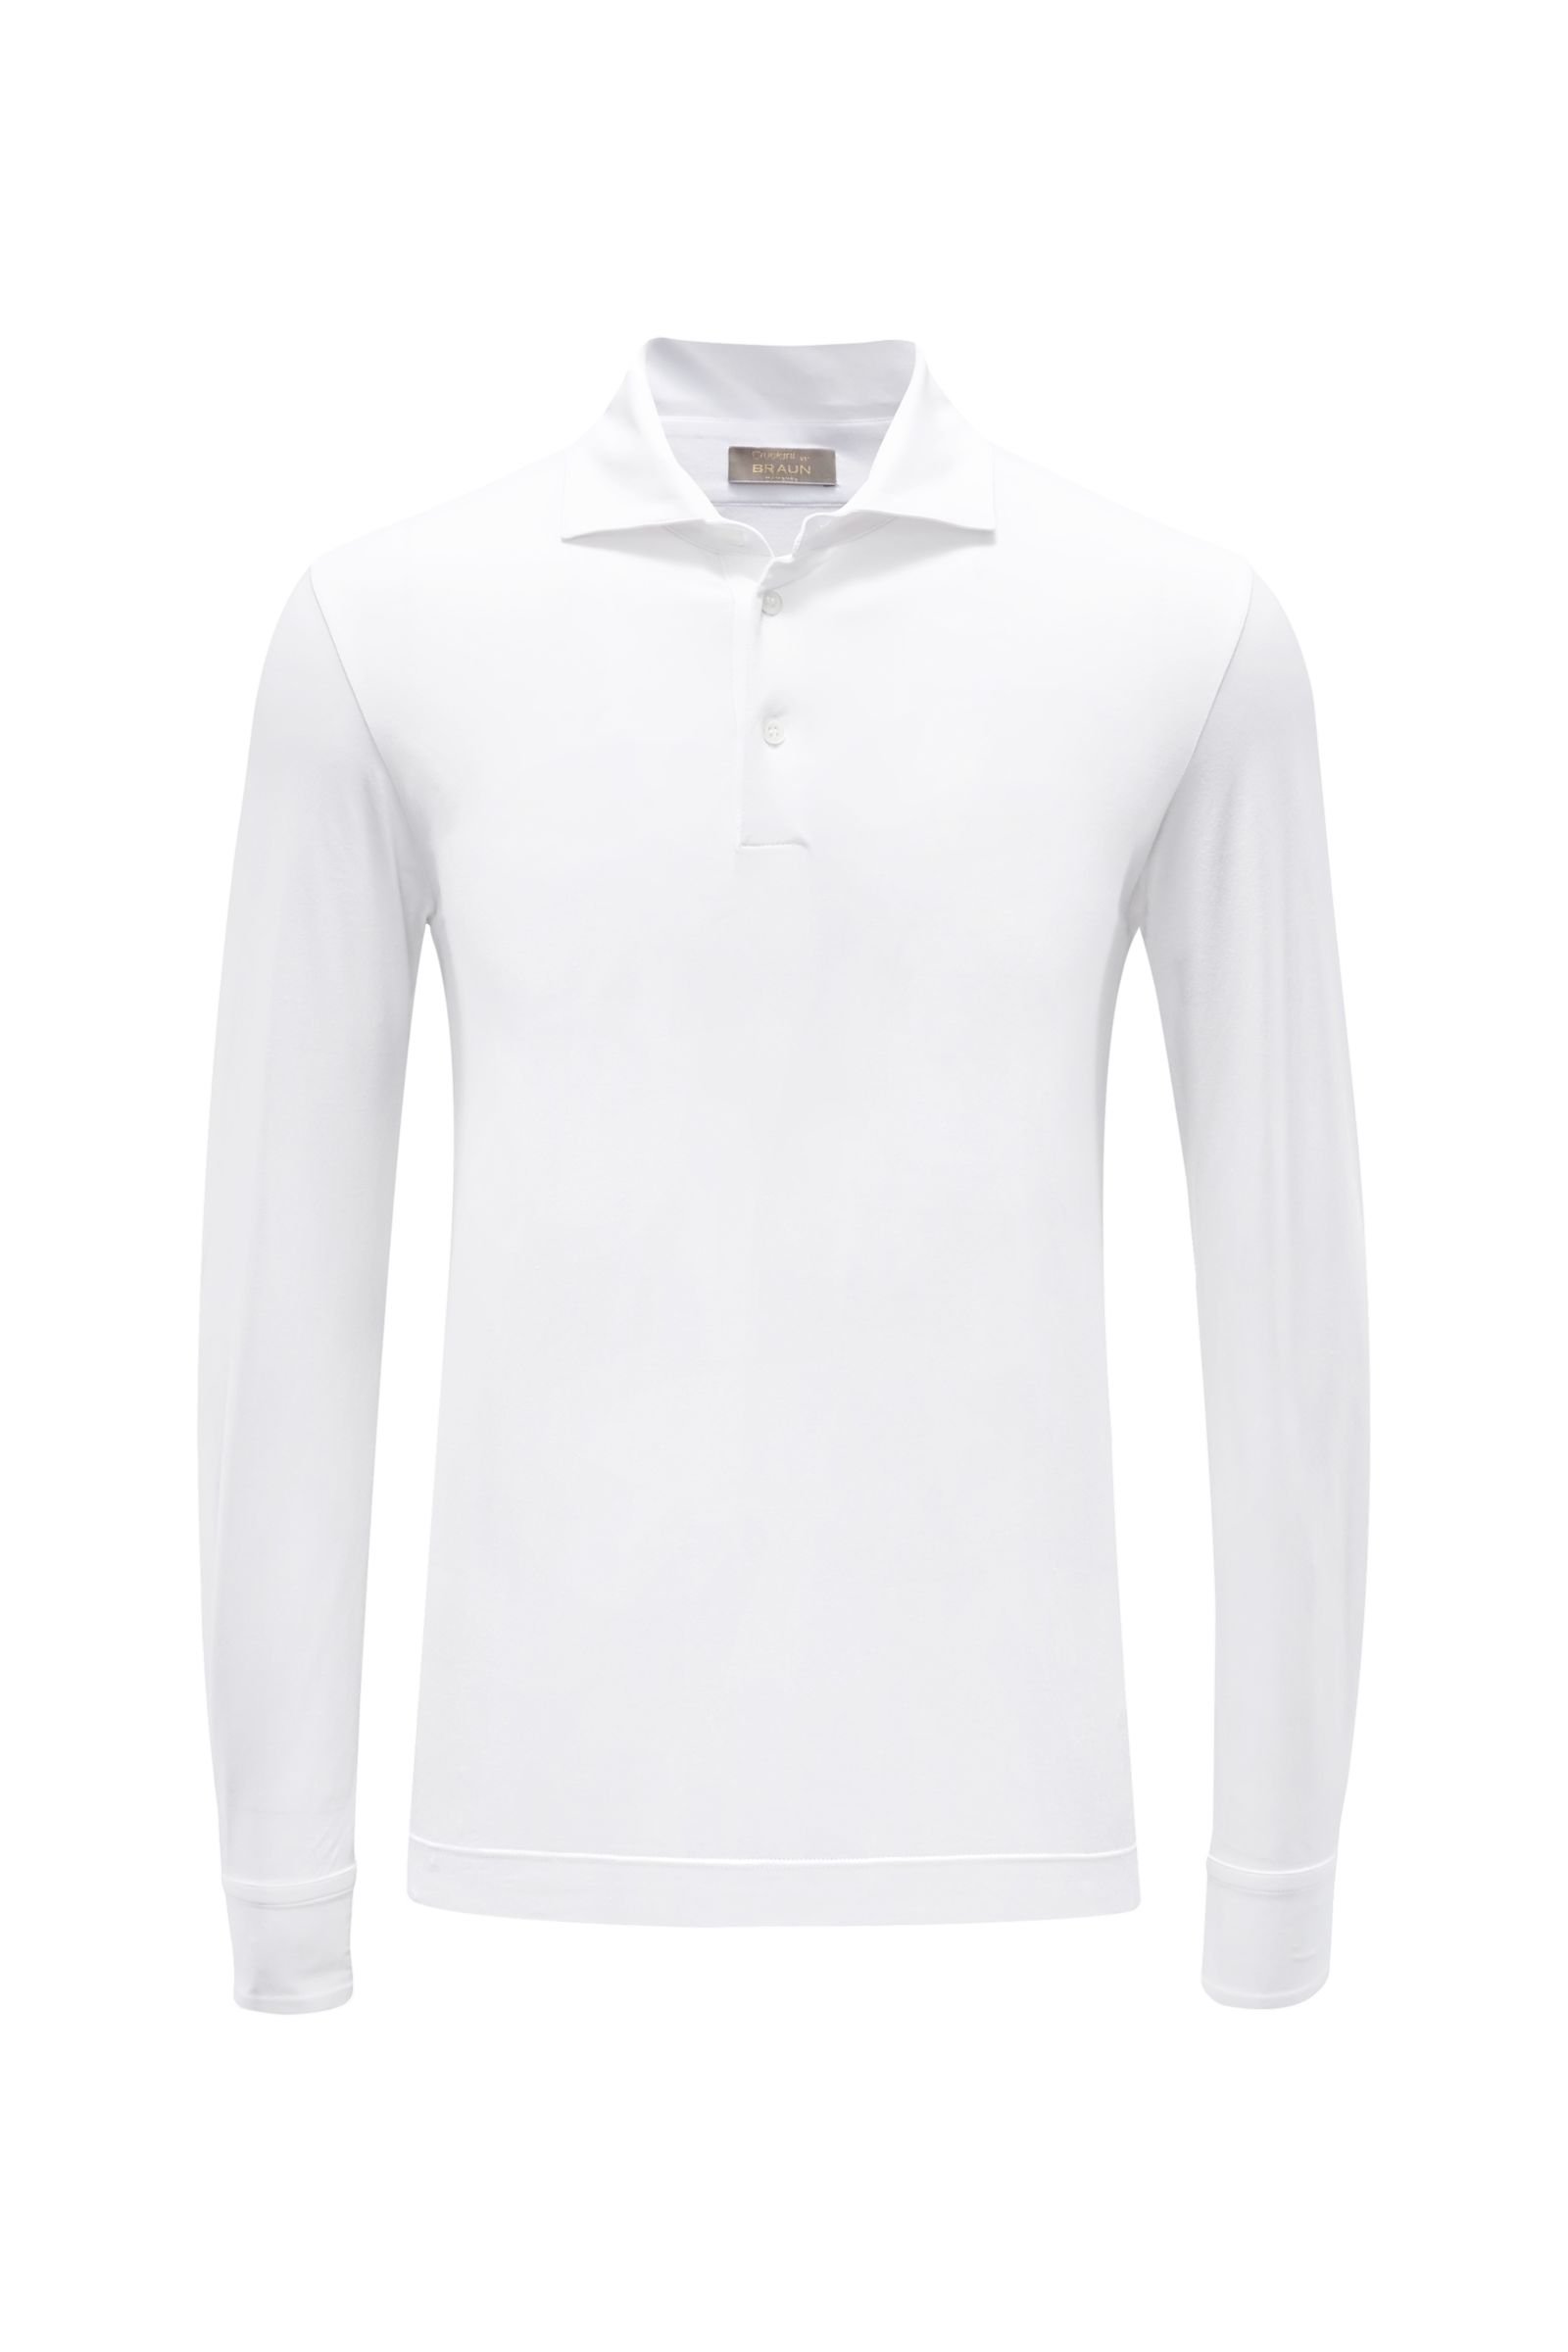 Langarm-Poloshirt weiß